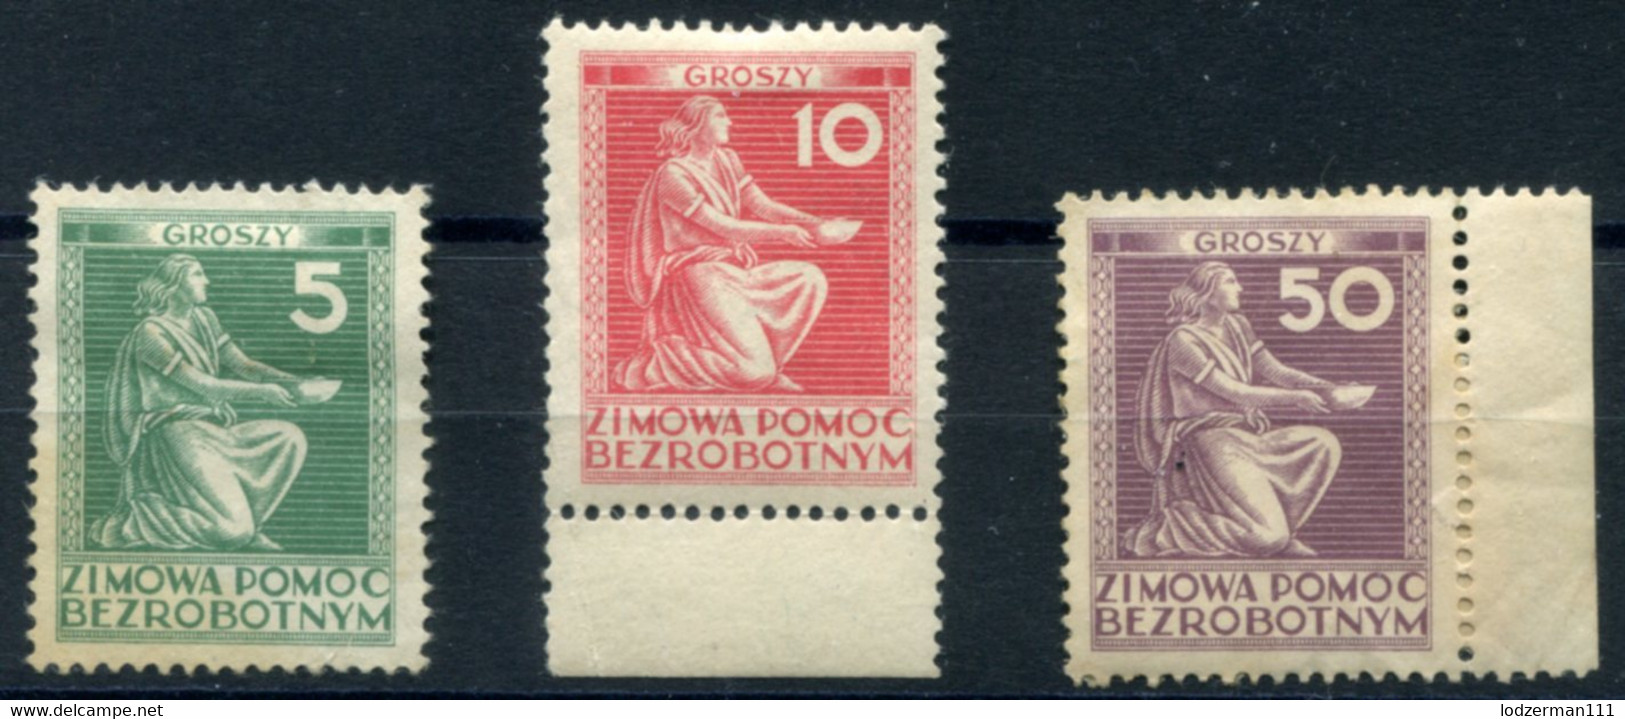 1935 Surtax BEZROBOTNYM (unemployment) - 3 Stamps (MNG-MH) Rare - Fiscale Zegels